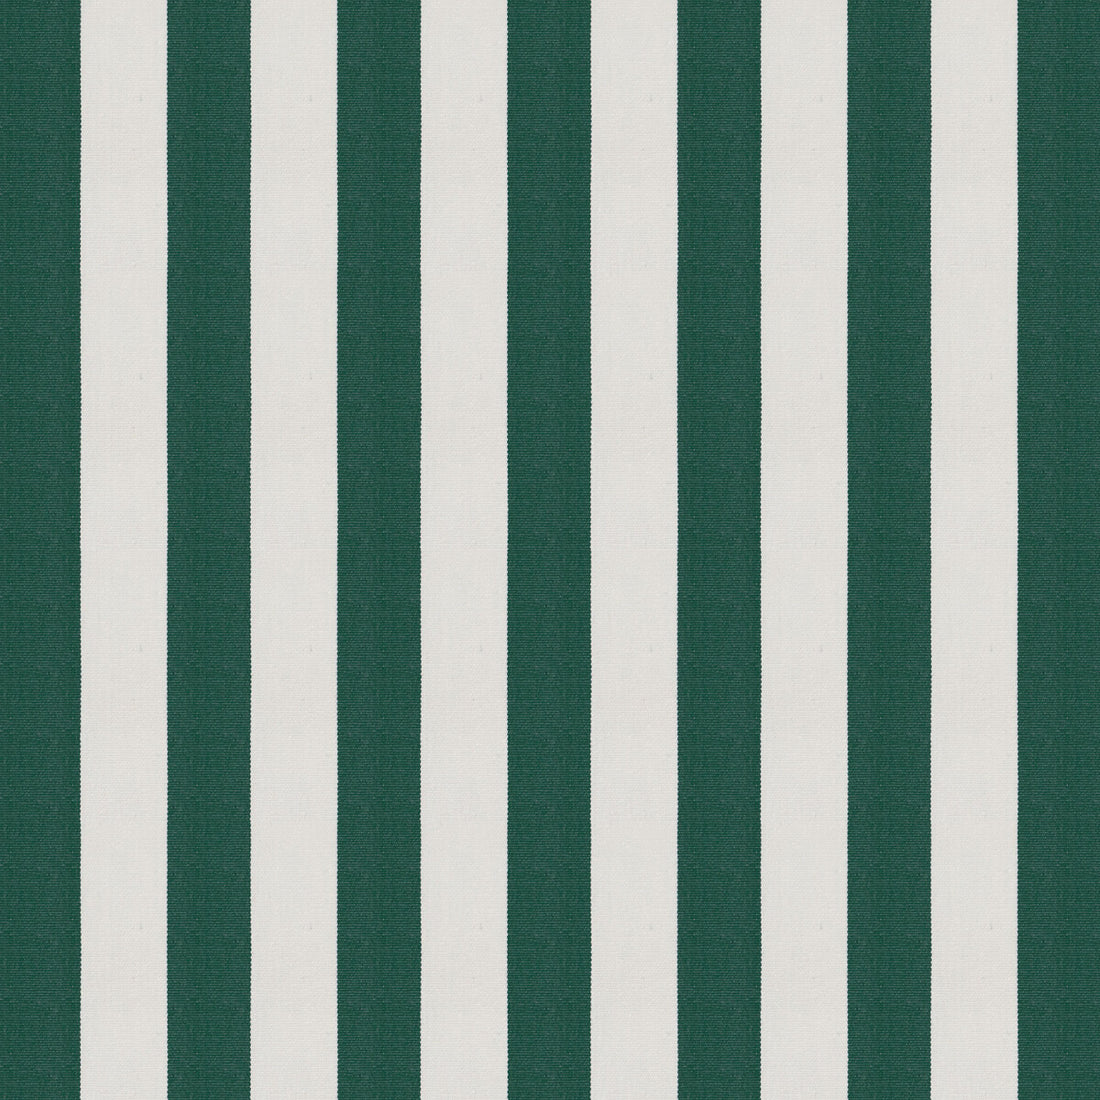 Almudaina fabric in blanco/verde botella color - pattern GDT5671.004.0 - by Gaston y Daniela in the Gaston Maiorica collection